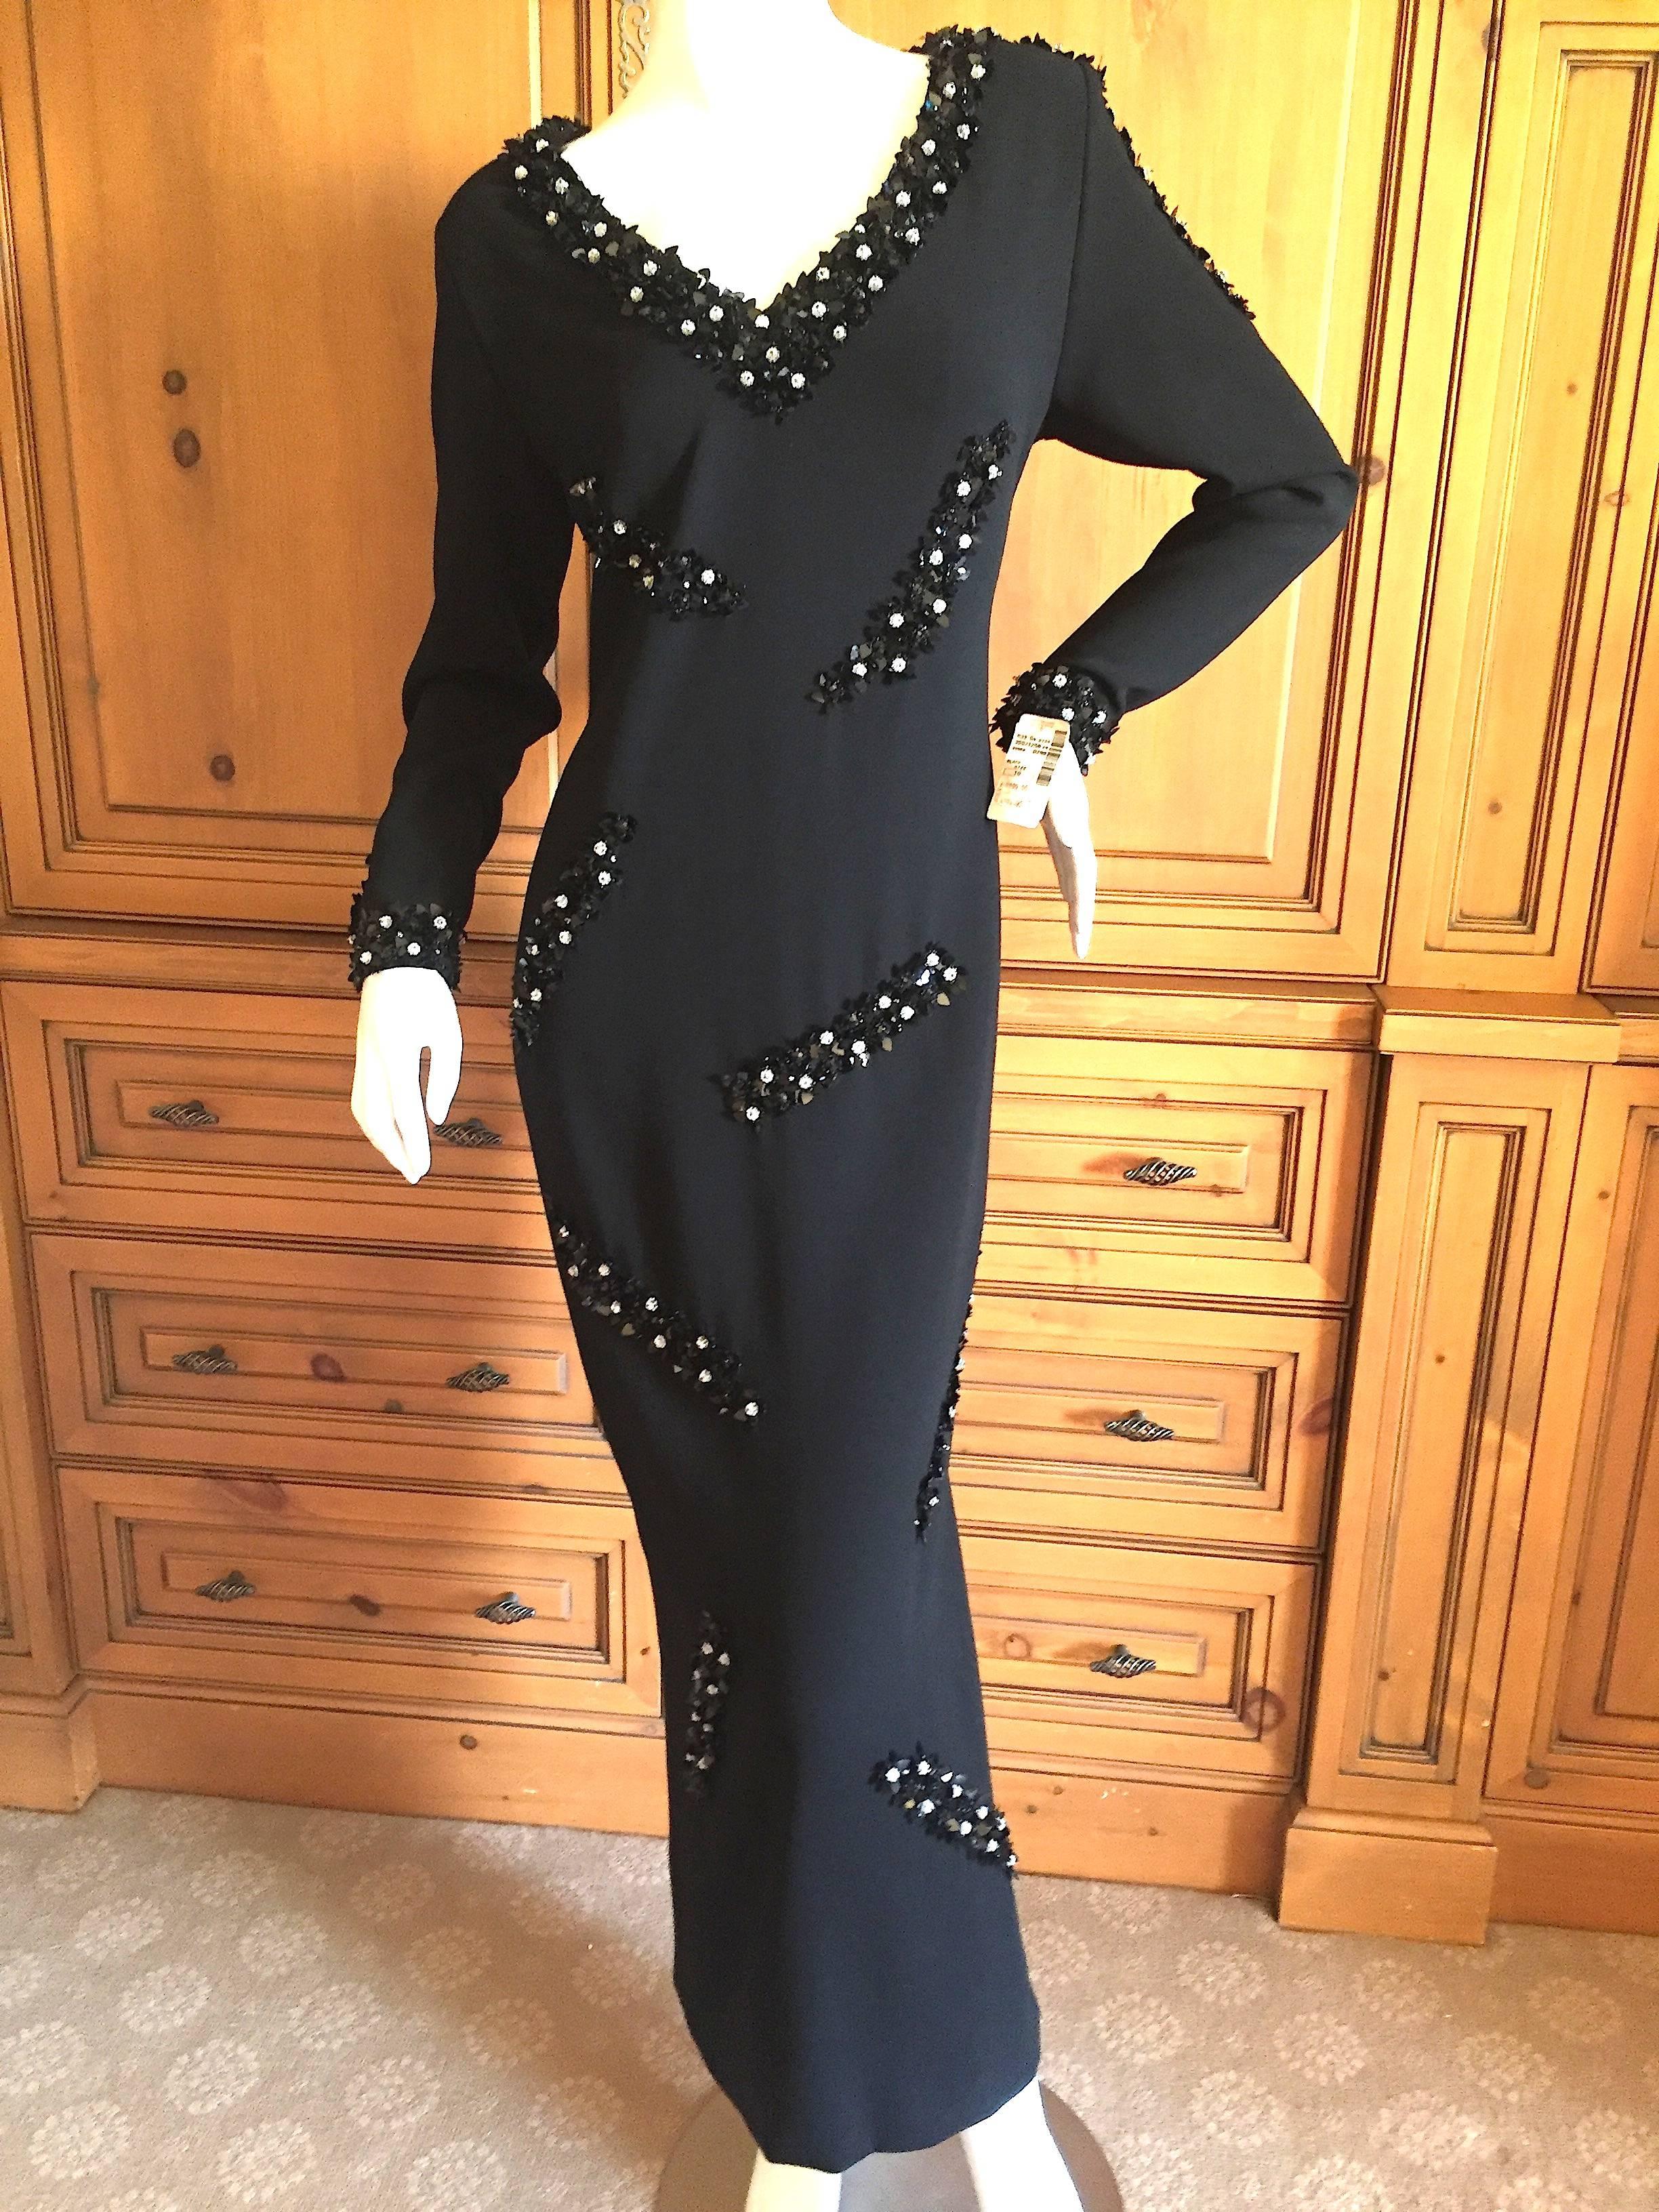 Galanos Black Bejeweled Evening Dress New w Tags Unworn Size 10 1